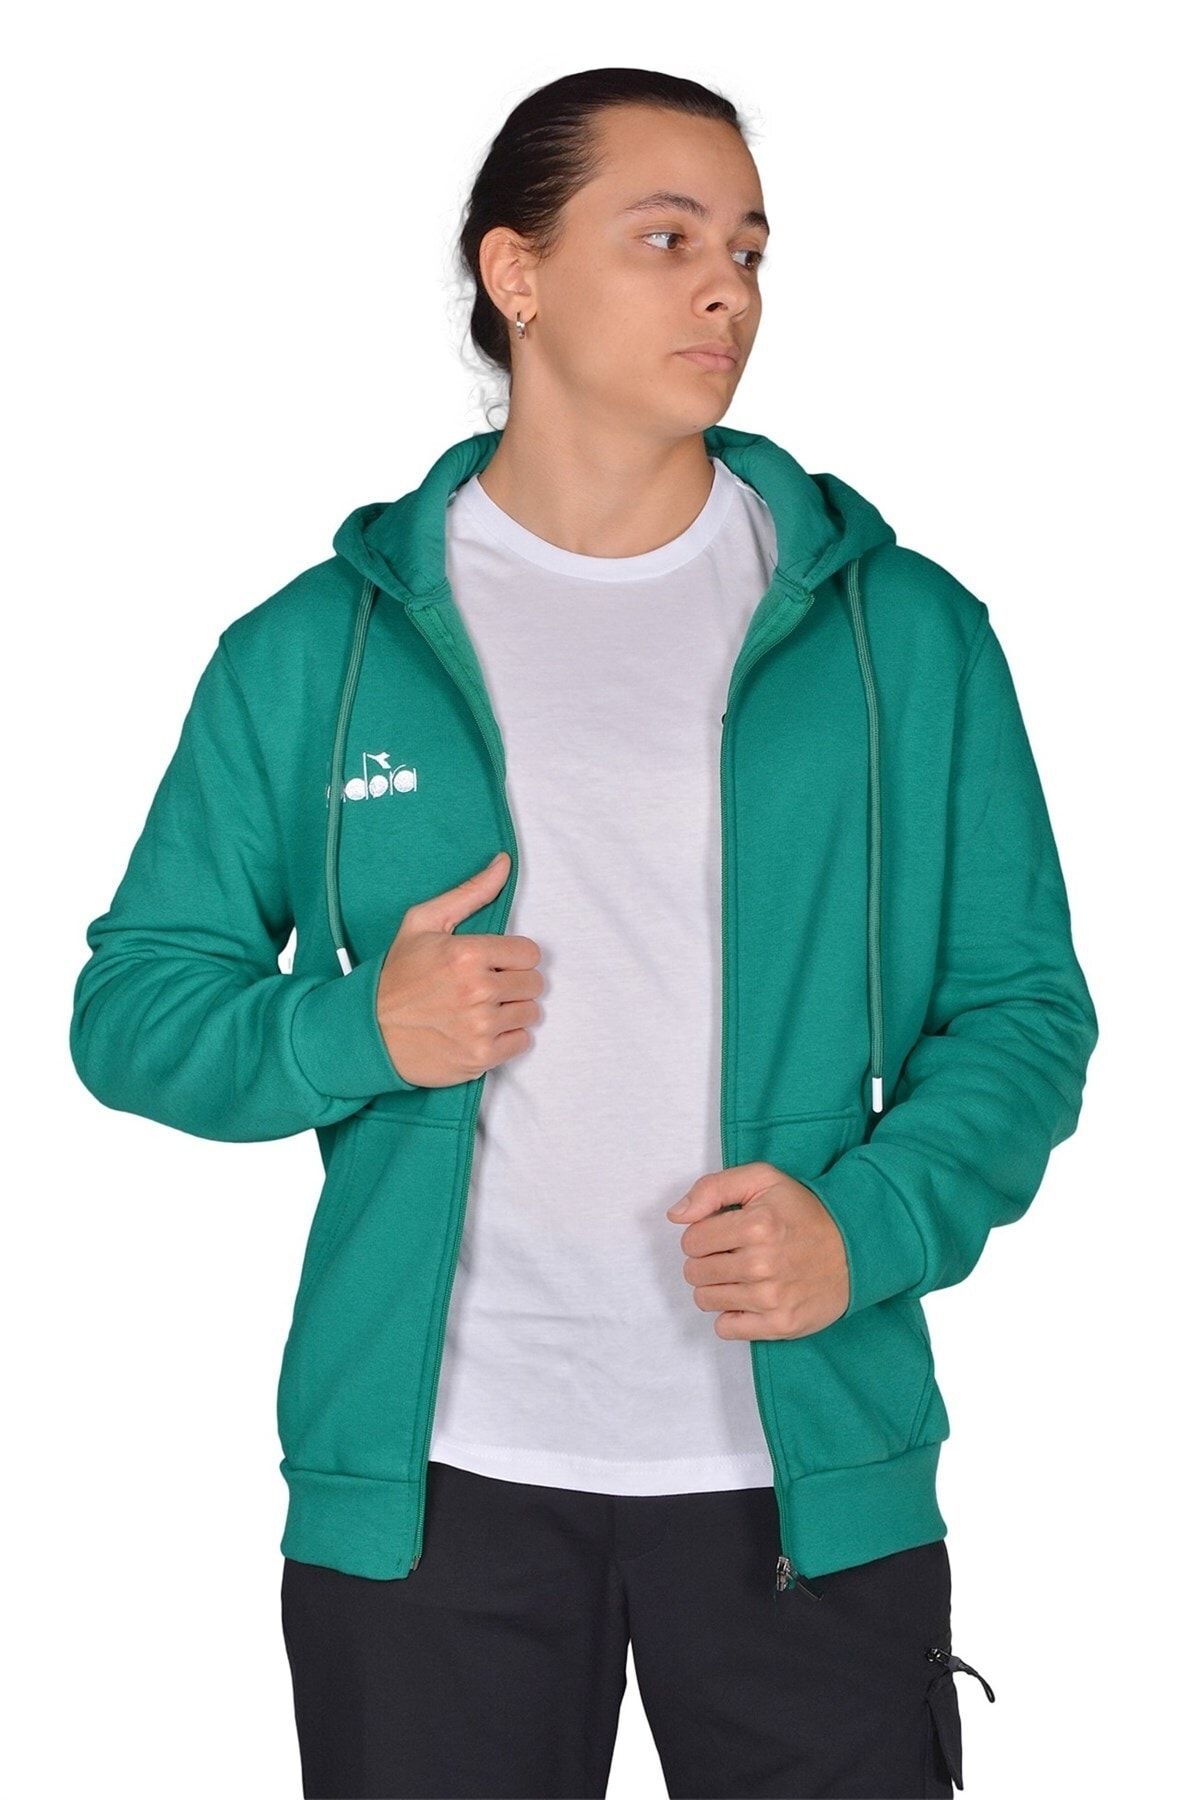 Diadora Imola - Erkek Yeşil Pamuklu Tam Fermuarlı Spor Sweatshirt - Ddtam1050049